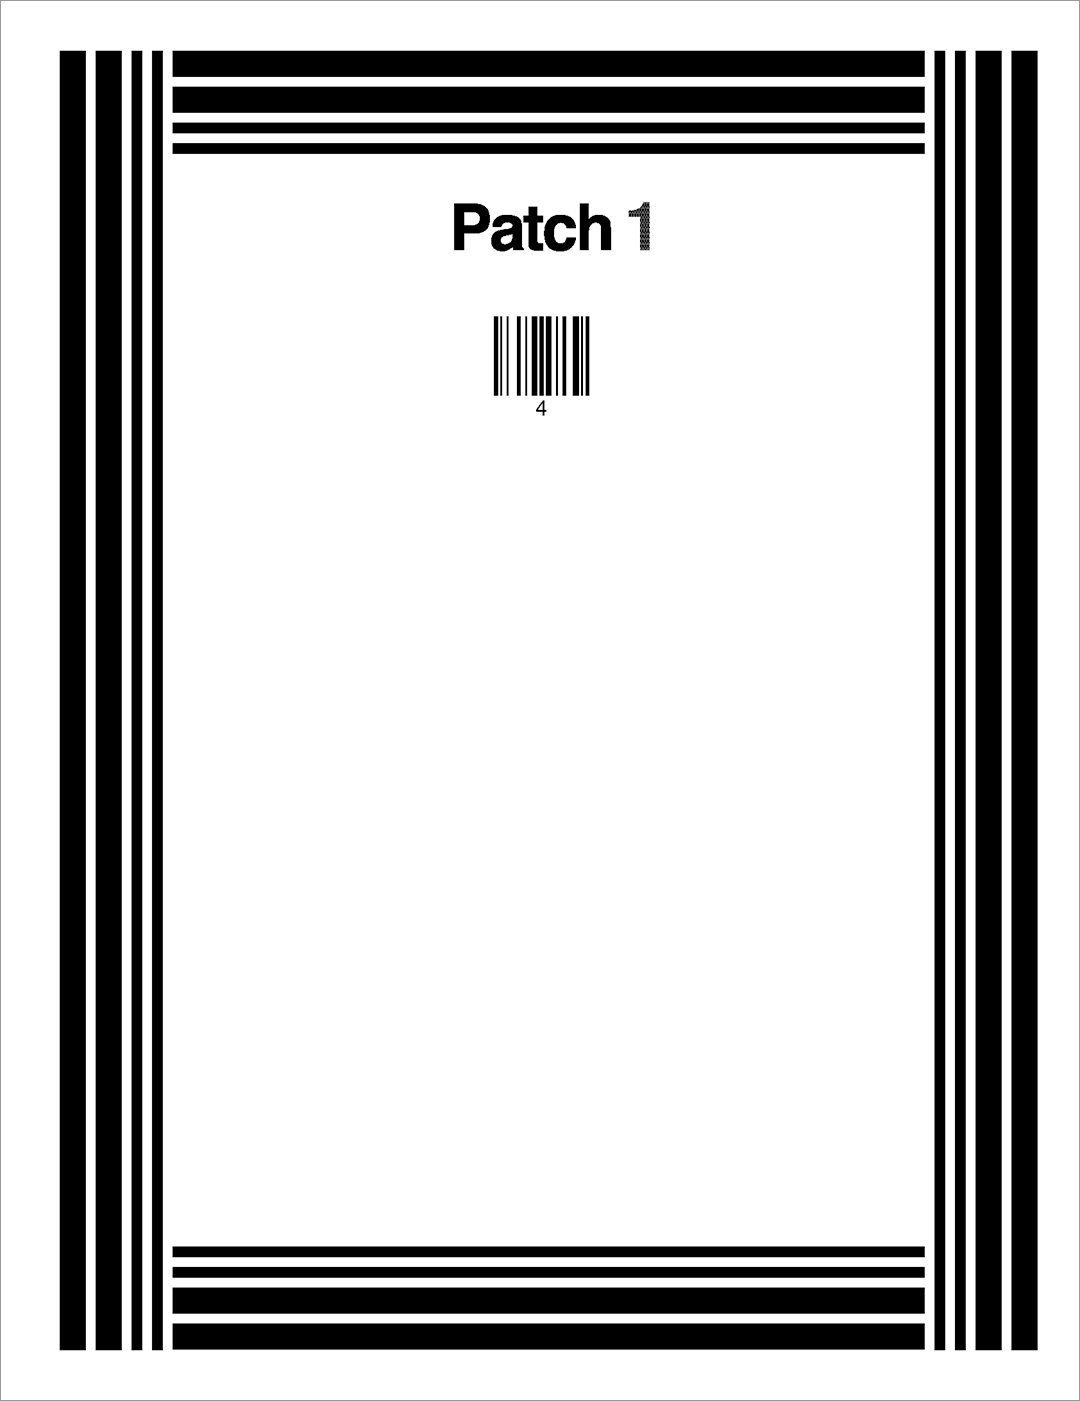 patch 1 separator